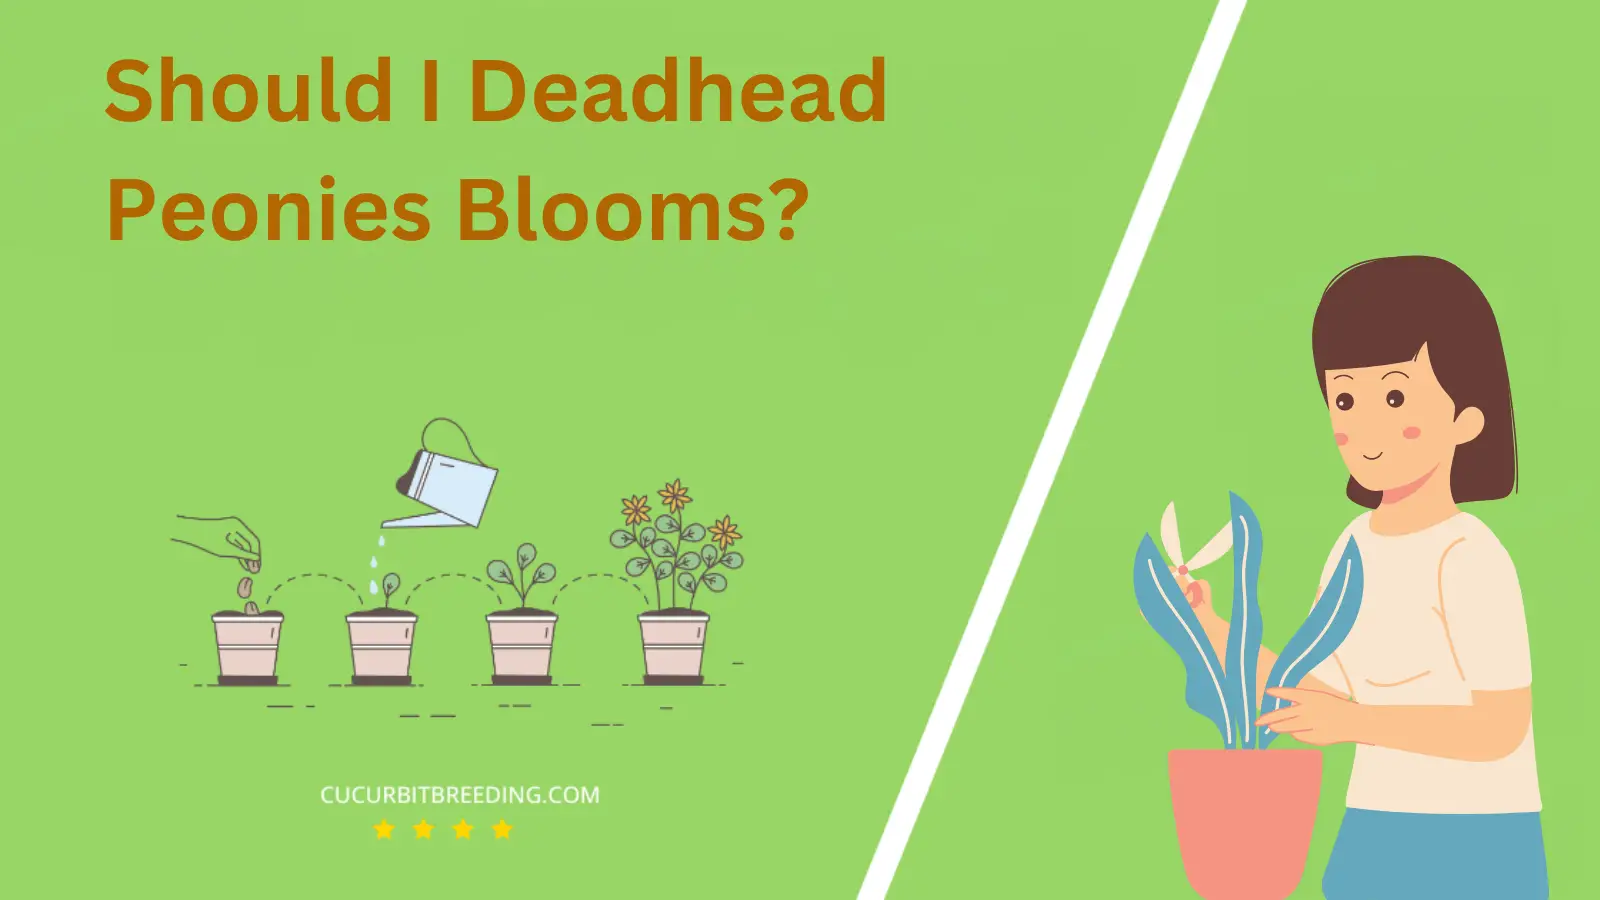 Should I Deadhead Peonies Blooms?